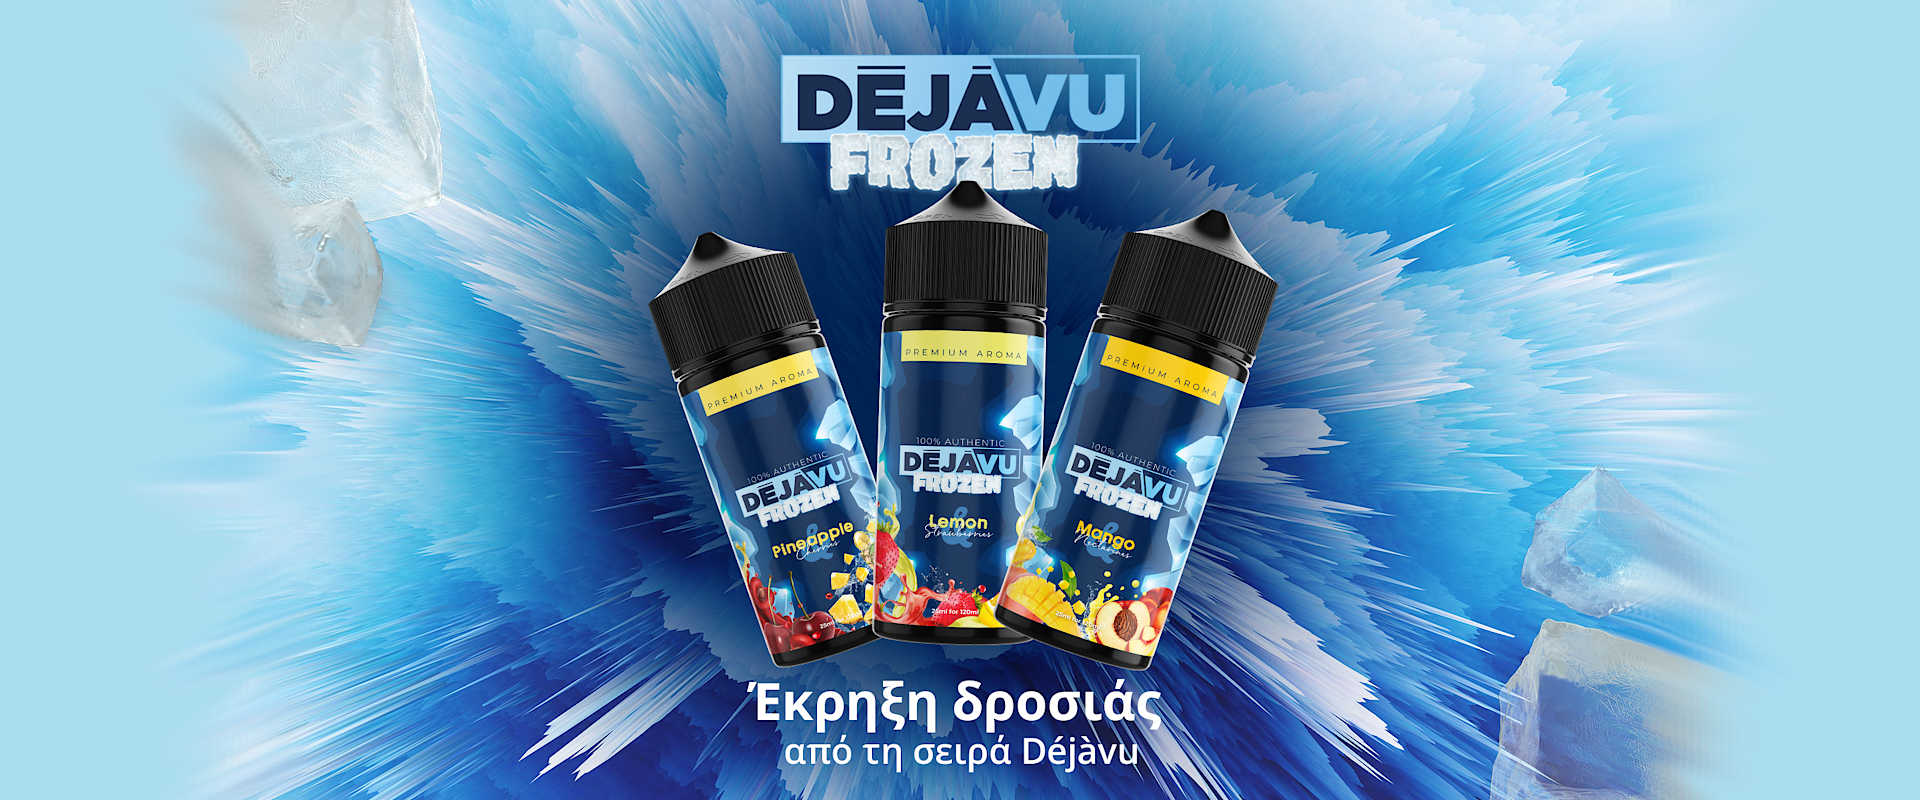 Dejavu-Frozen-Series-Flavor-Shots